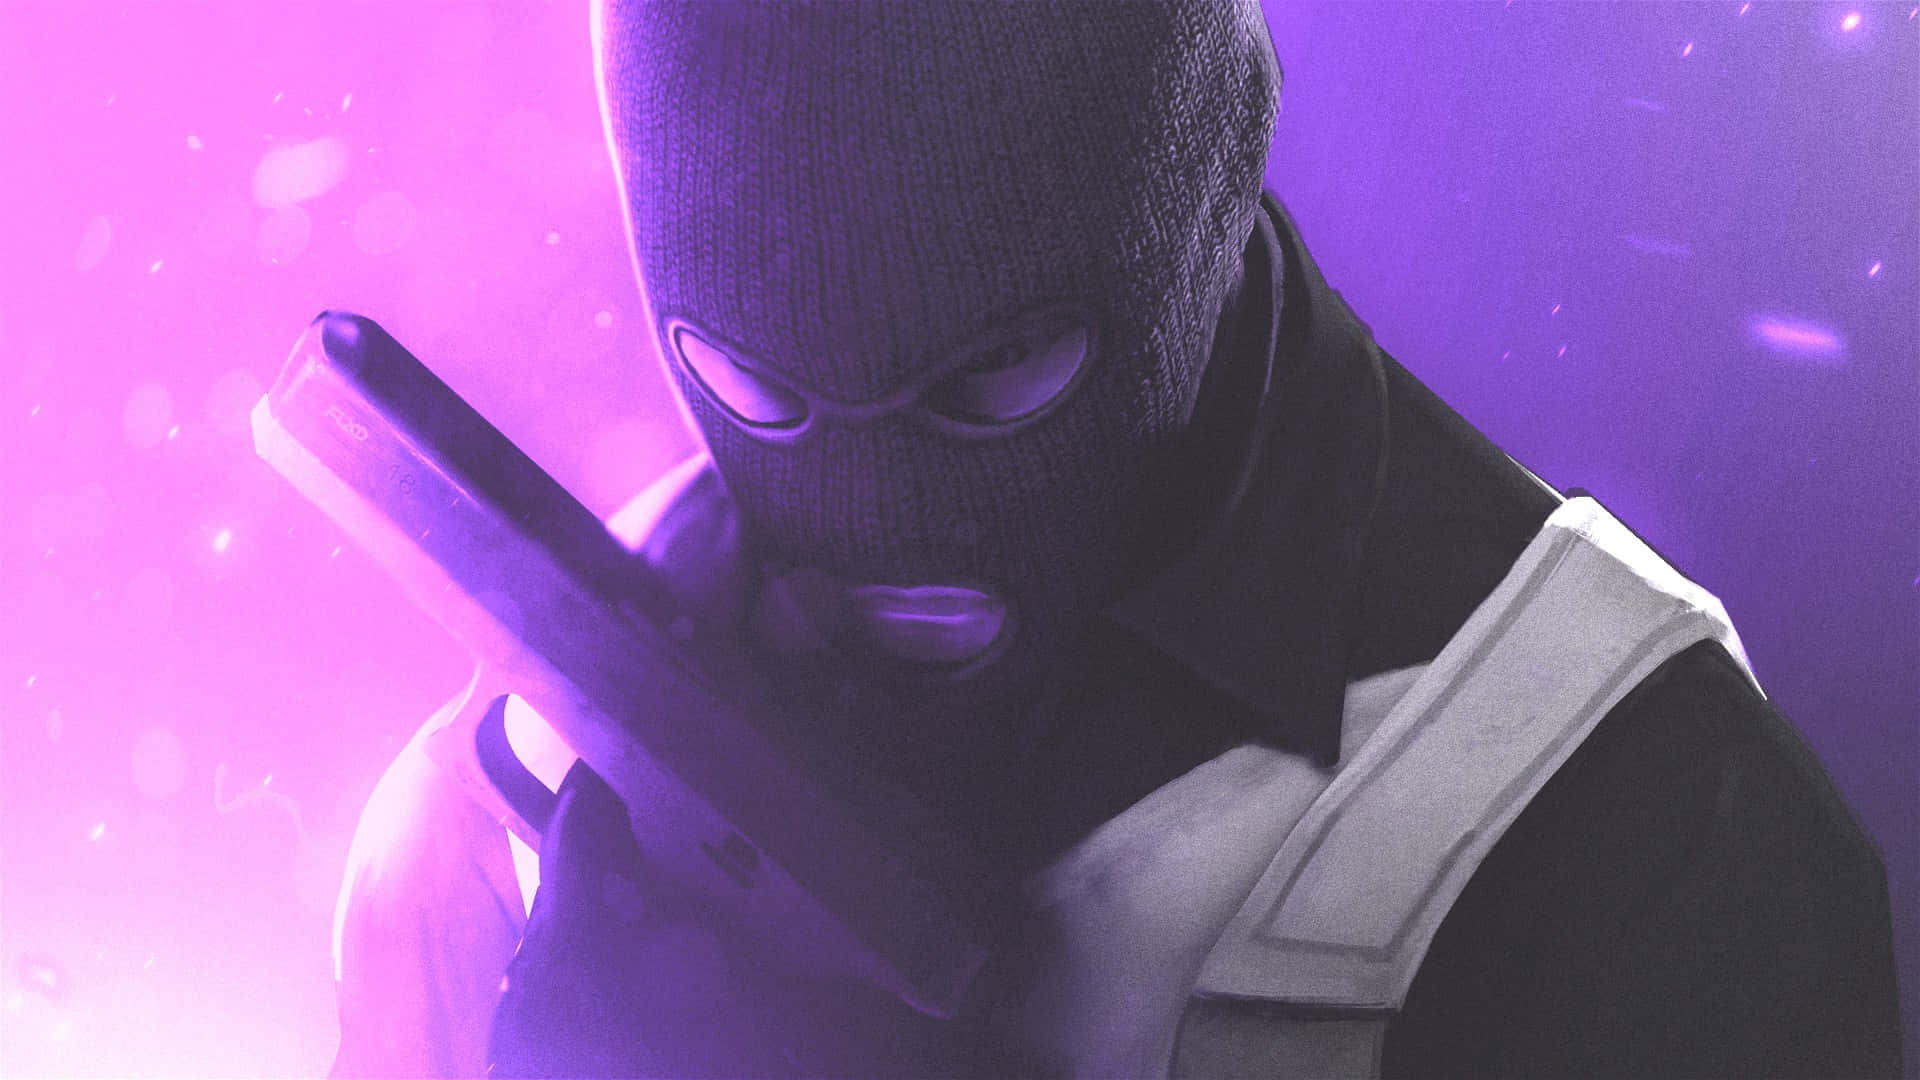 Rosa og lilla 1080p Counter Strike Global Offensive baggrund